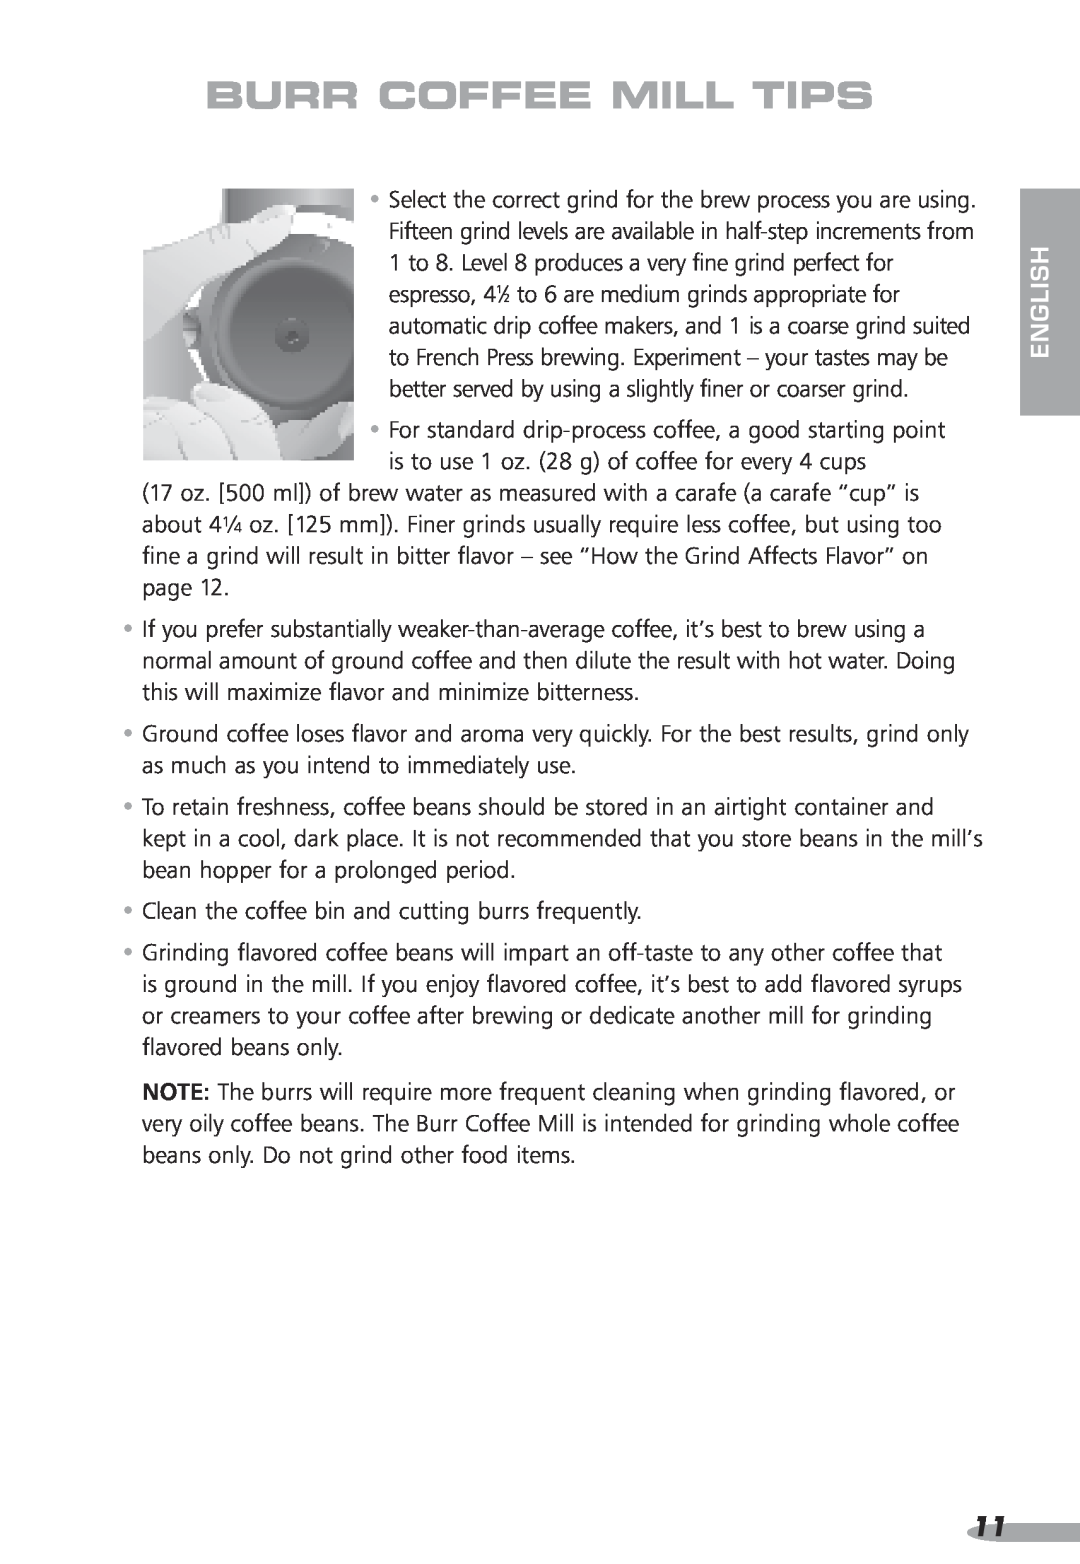 KitchenAid Coffee Grinder, KPCG100, 87, PRO LINE specifications Burr Coffee Mill tips, English 